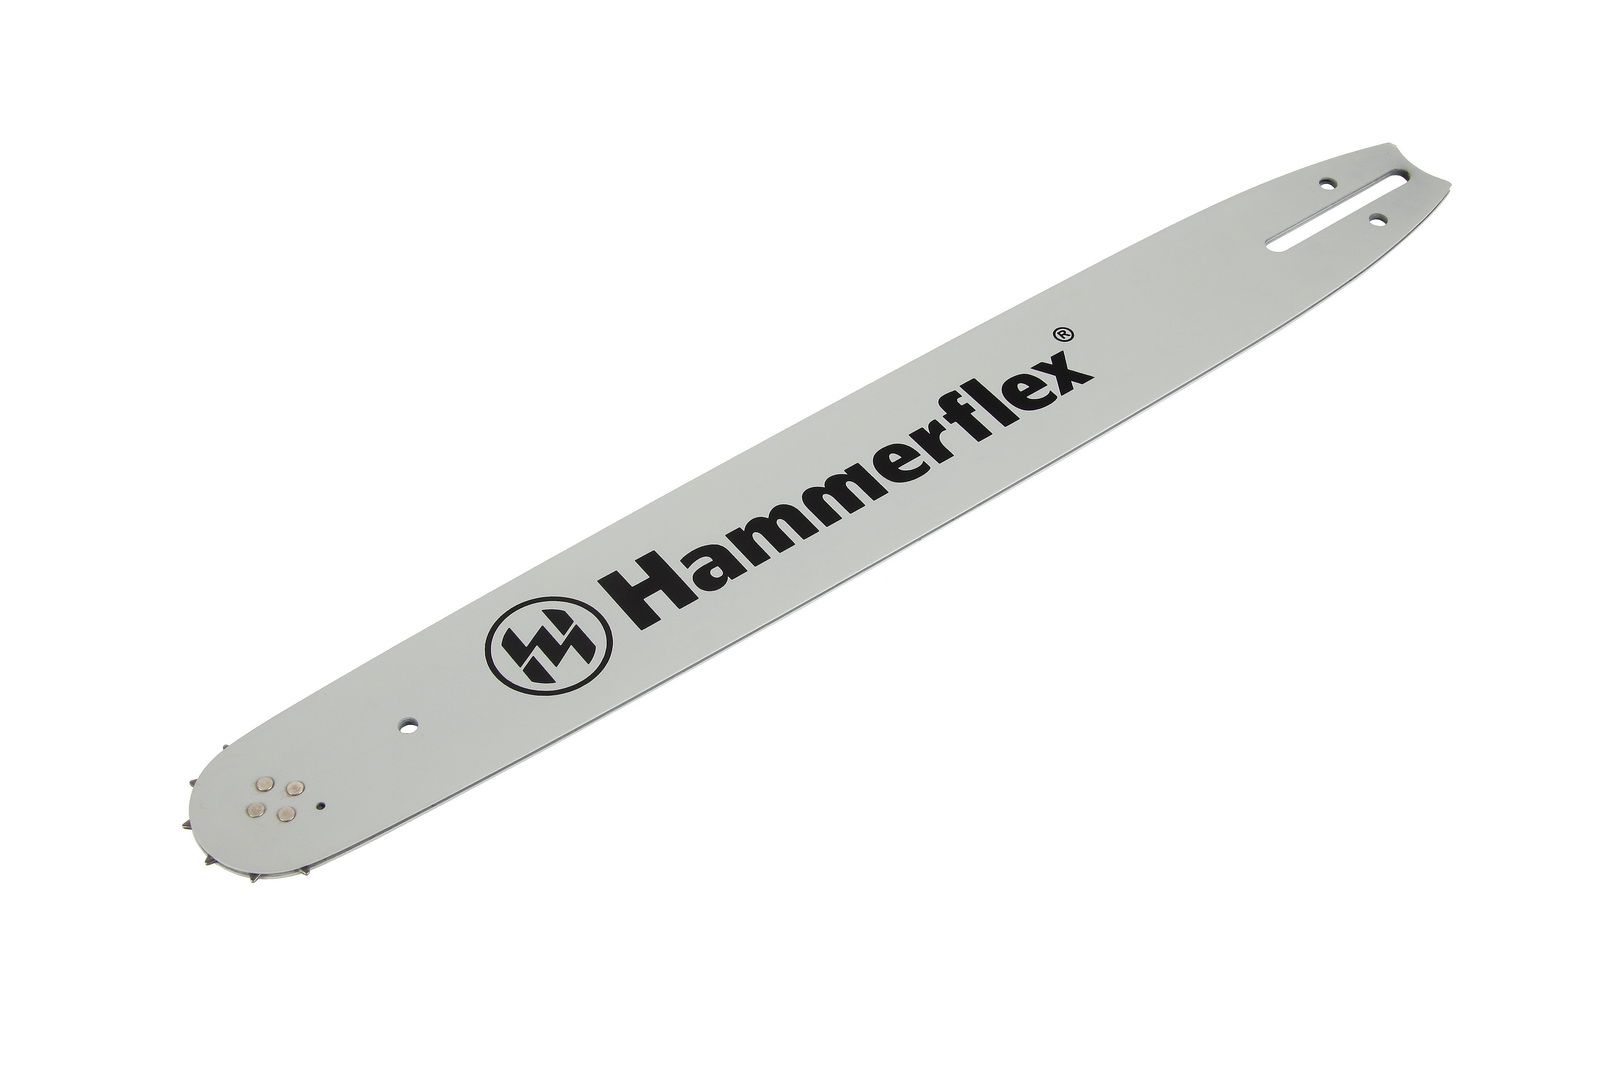 Шина цепной пилы Hammer 401-006 0,325''-1,3 мм-72, 18 дюймов